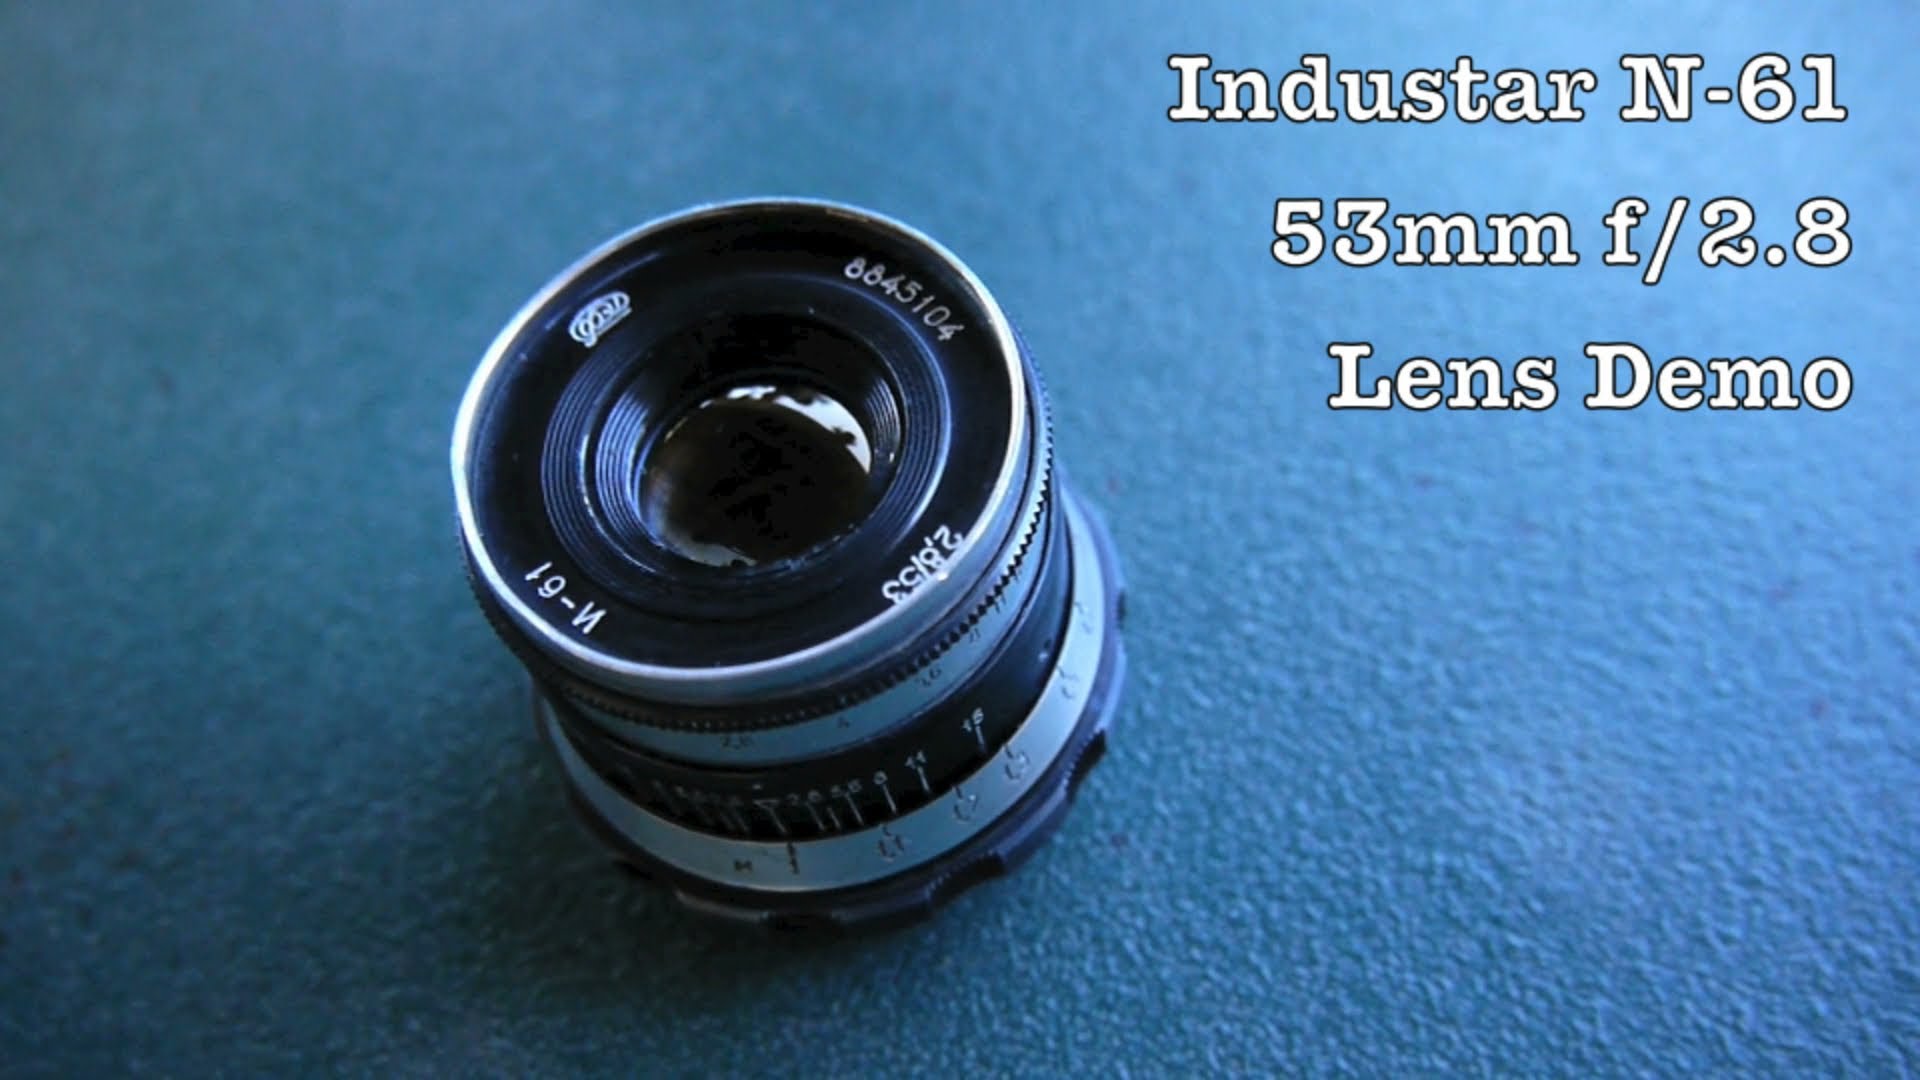 Industar N-61 53mm f/2.8 Leica L39 Lens 35mm Film SLR & DSLR Cameras / Compact Mirrorless w/ Adapter